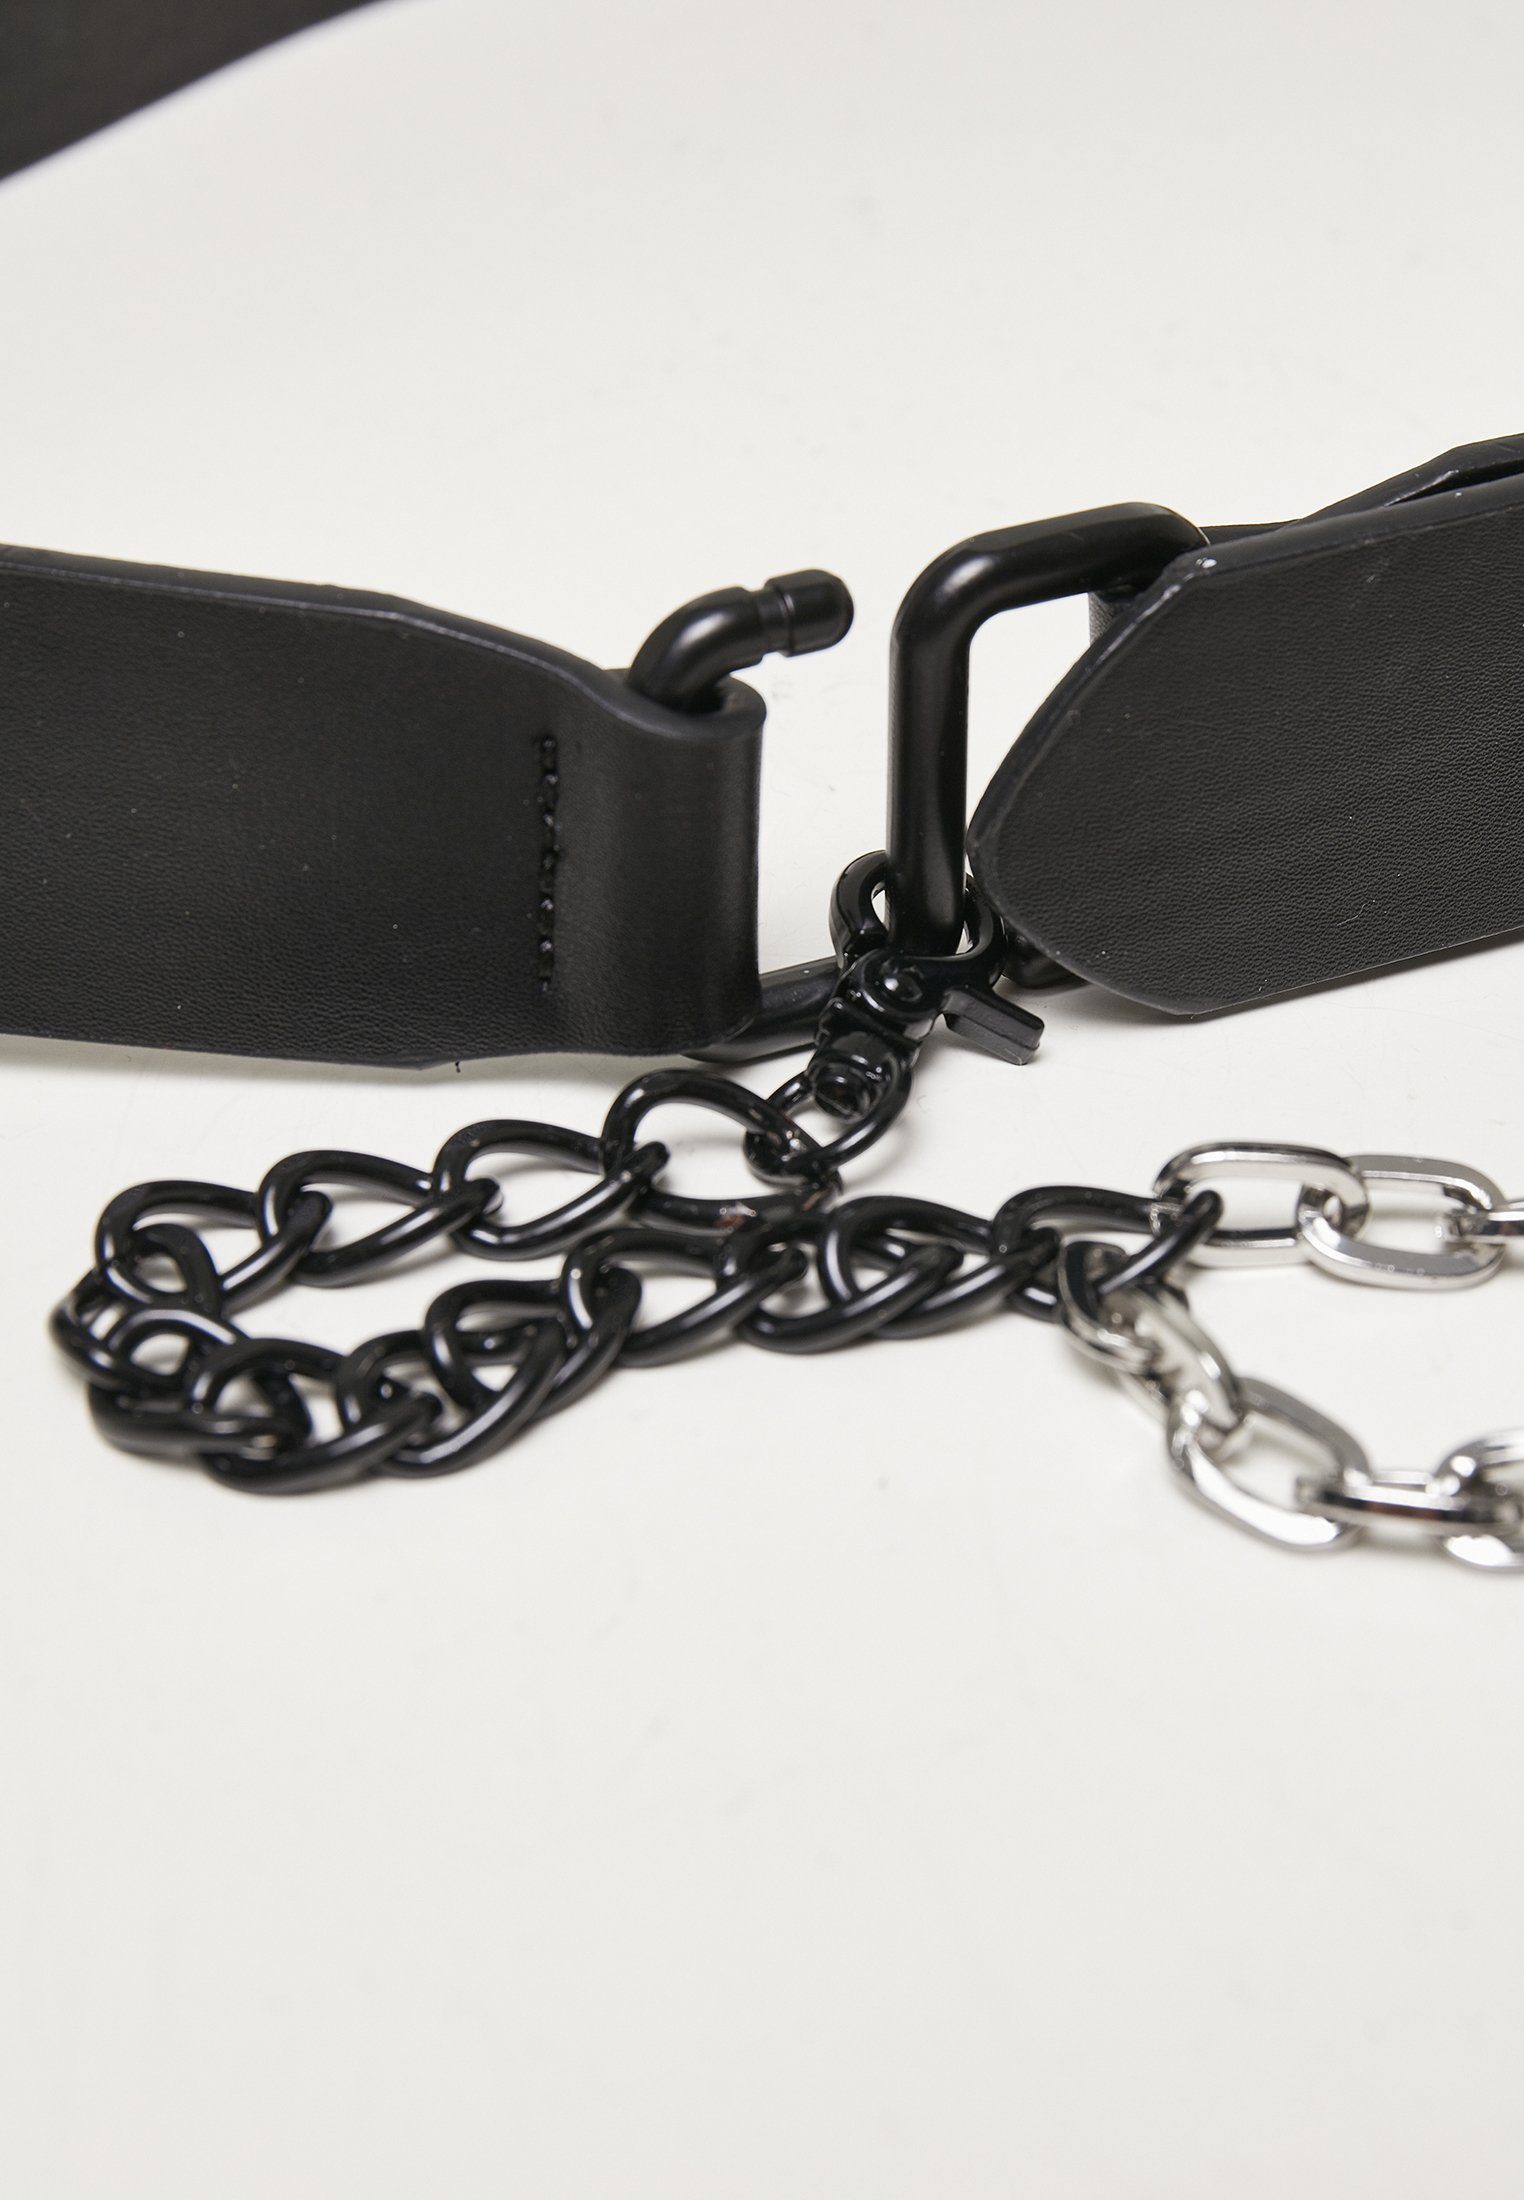 With Imitation Chain Metal Hüftgürtel Belt Accessories CLASSICS Leather URBAN